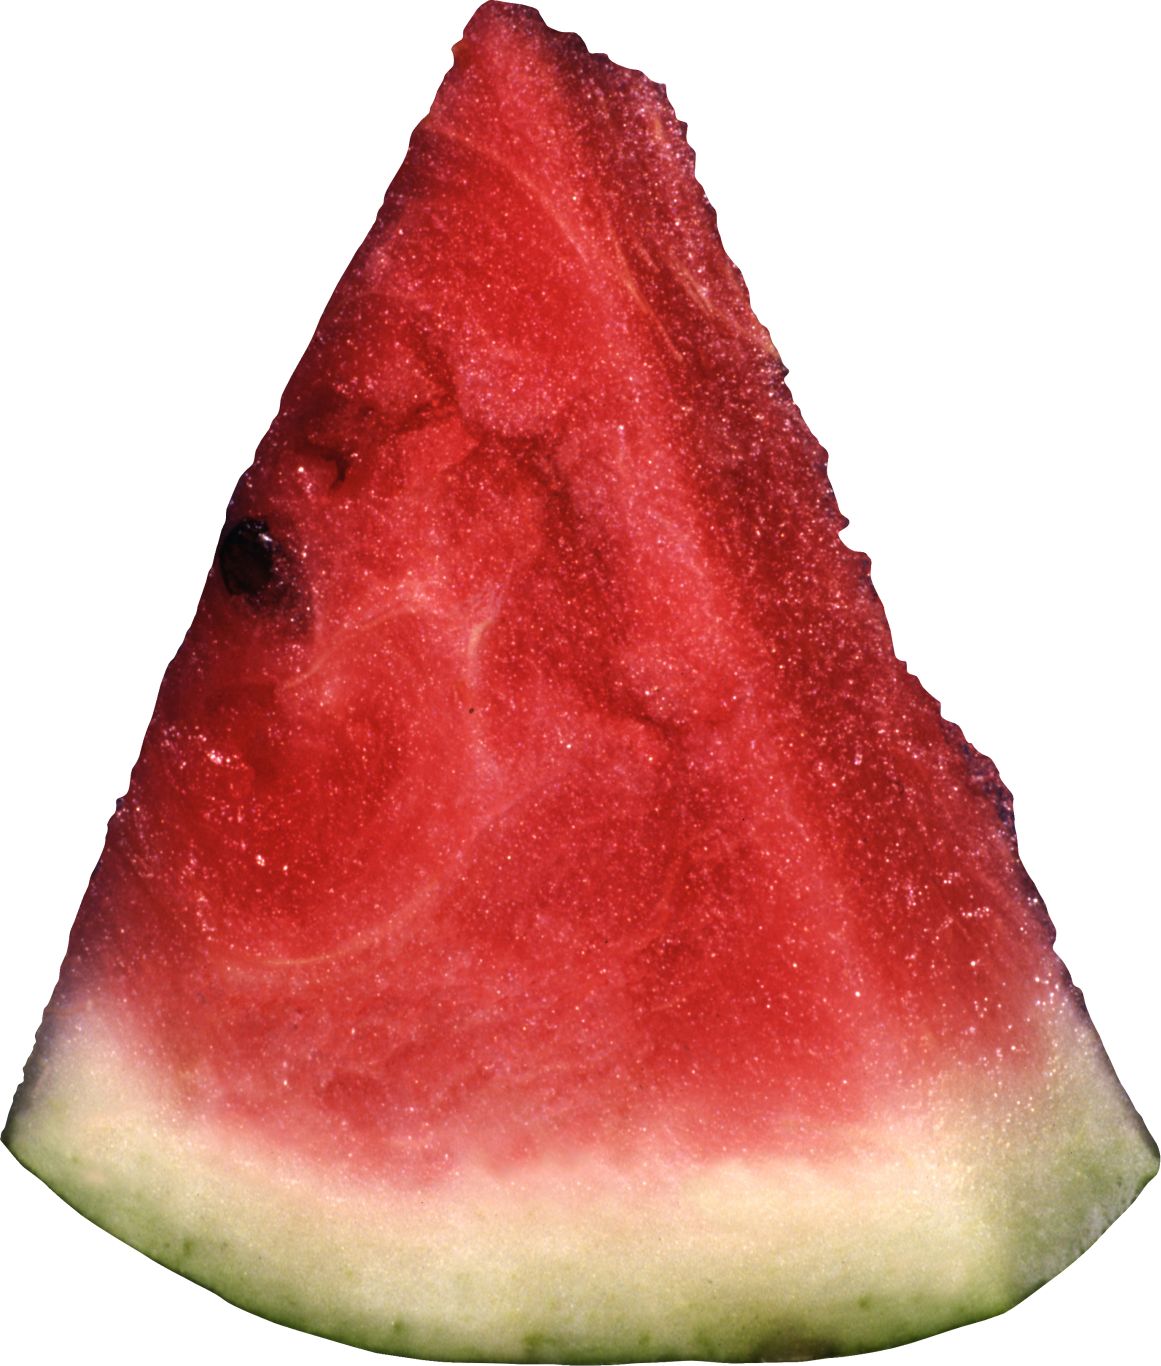 watermelon PNG image    图片编号:2645